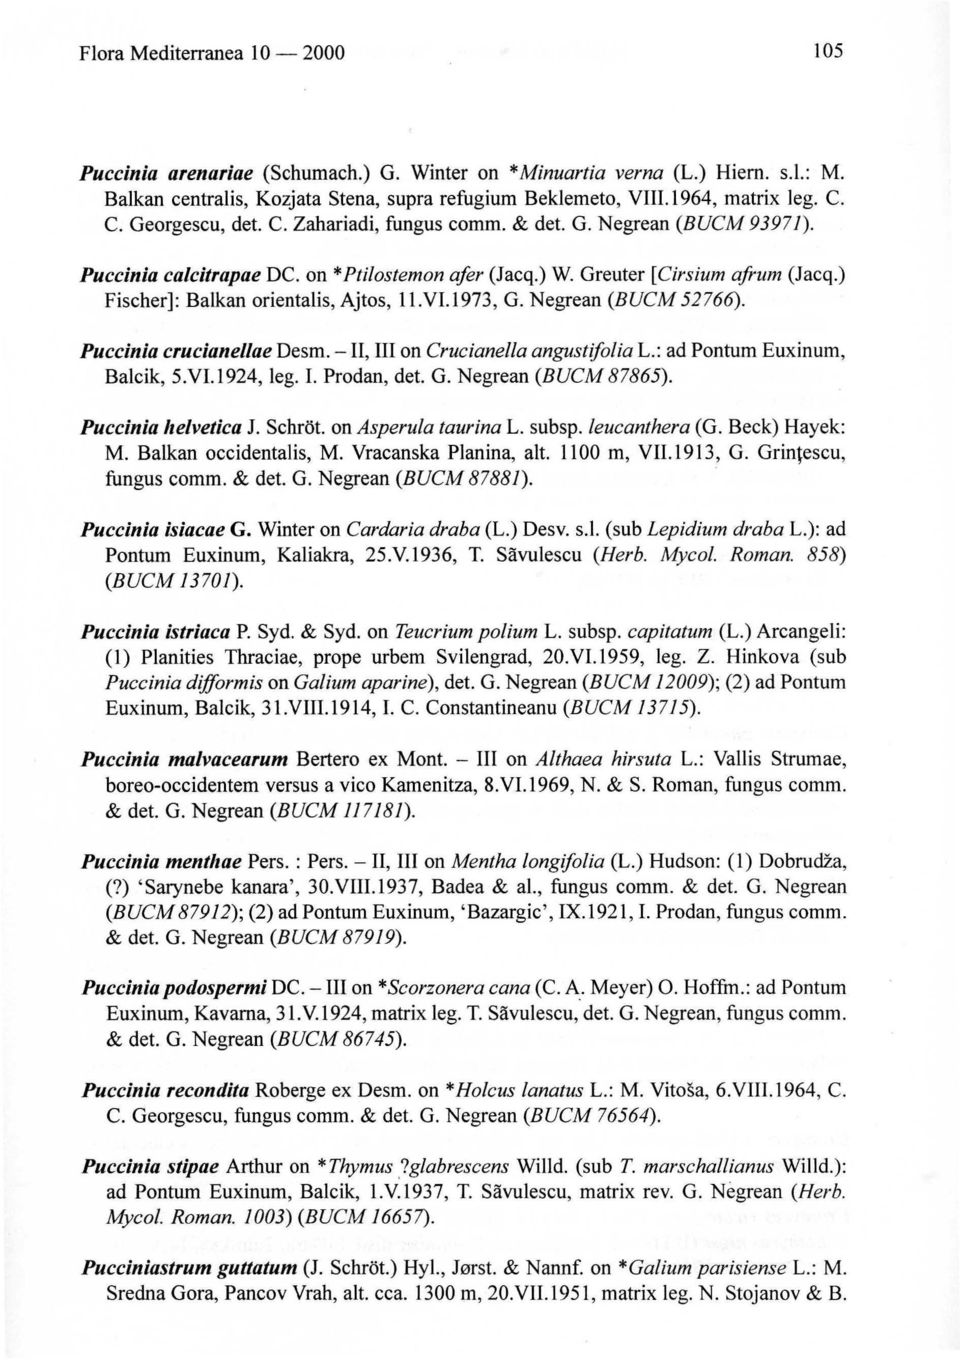 ) Fischer]: Balkan orientalis, Ajtos, Il.VI.l973, G. Negrean (BUCM 52766). Puccinia crucianellae Desm. -II, III on Crucianella angustifolia L.: ad Pontum Euxinum, Ba1cik, 5.VI.1924, lego I.